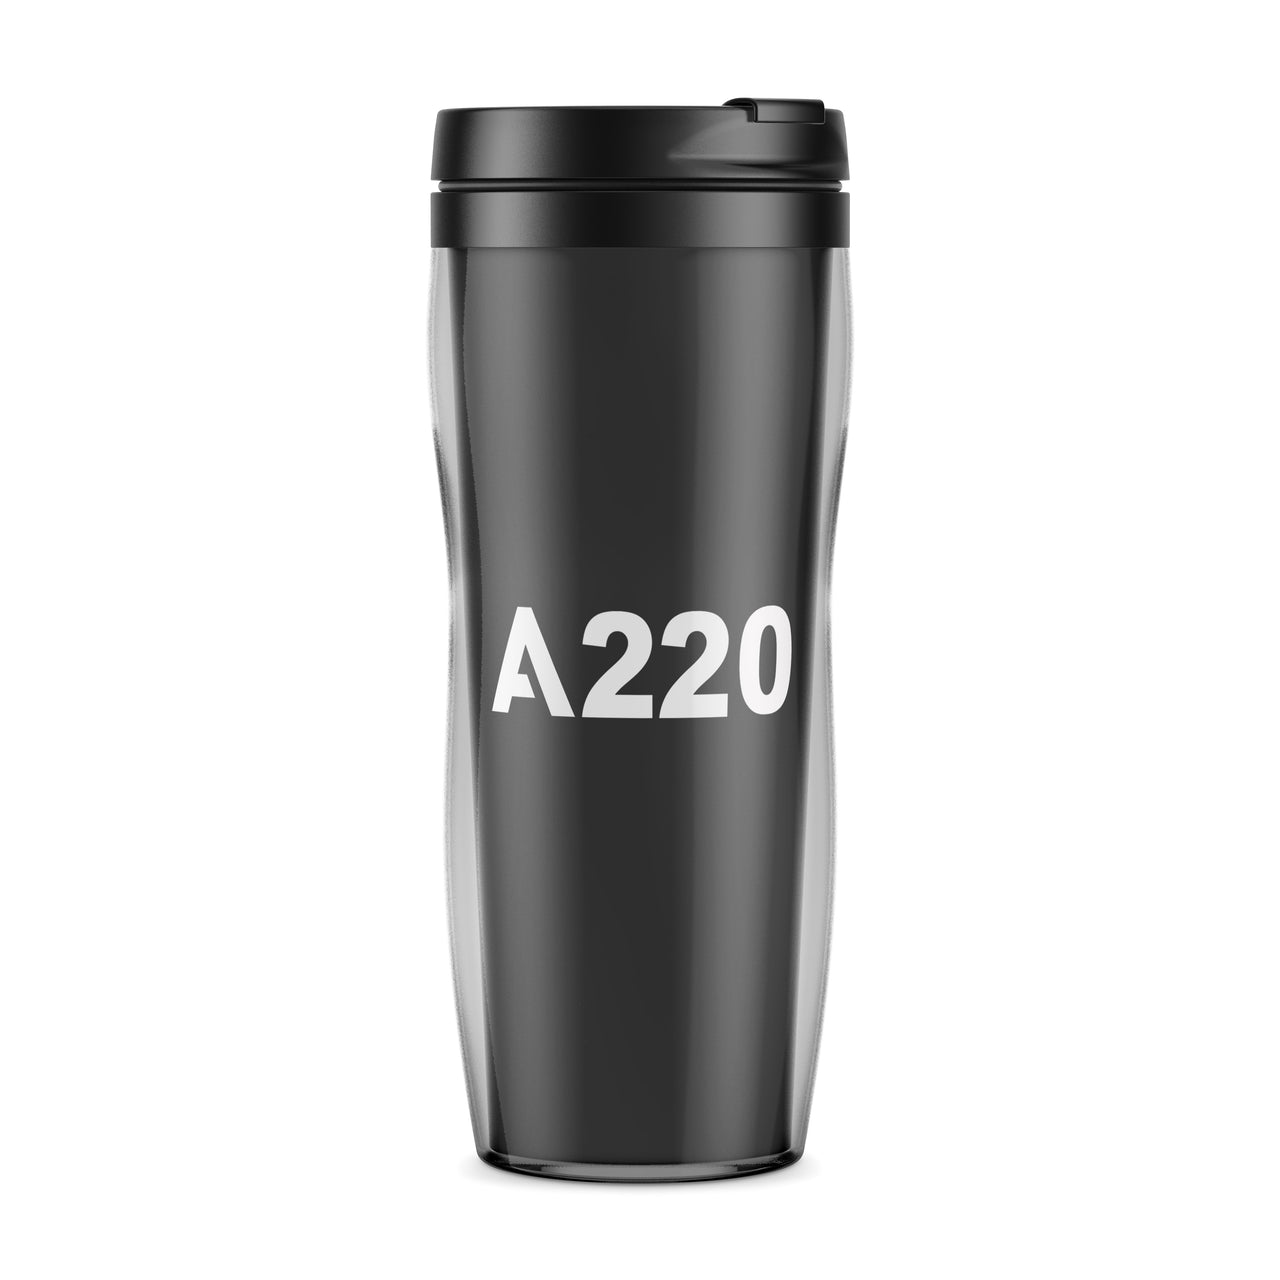 A220 Flat Text Designed Travel Mugs